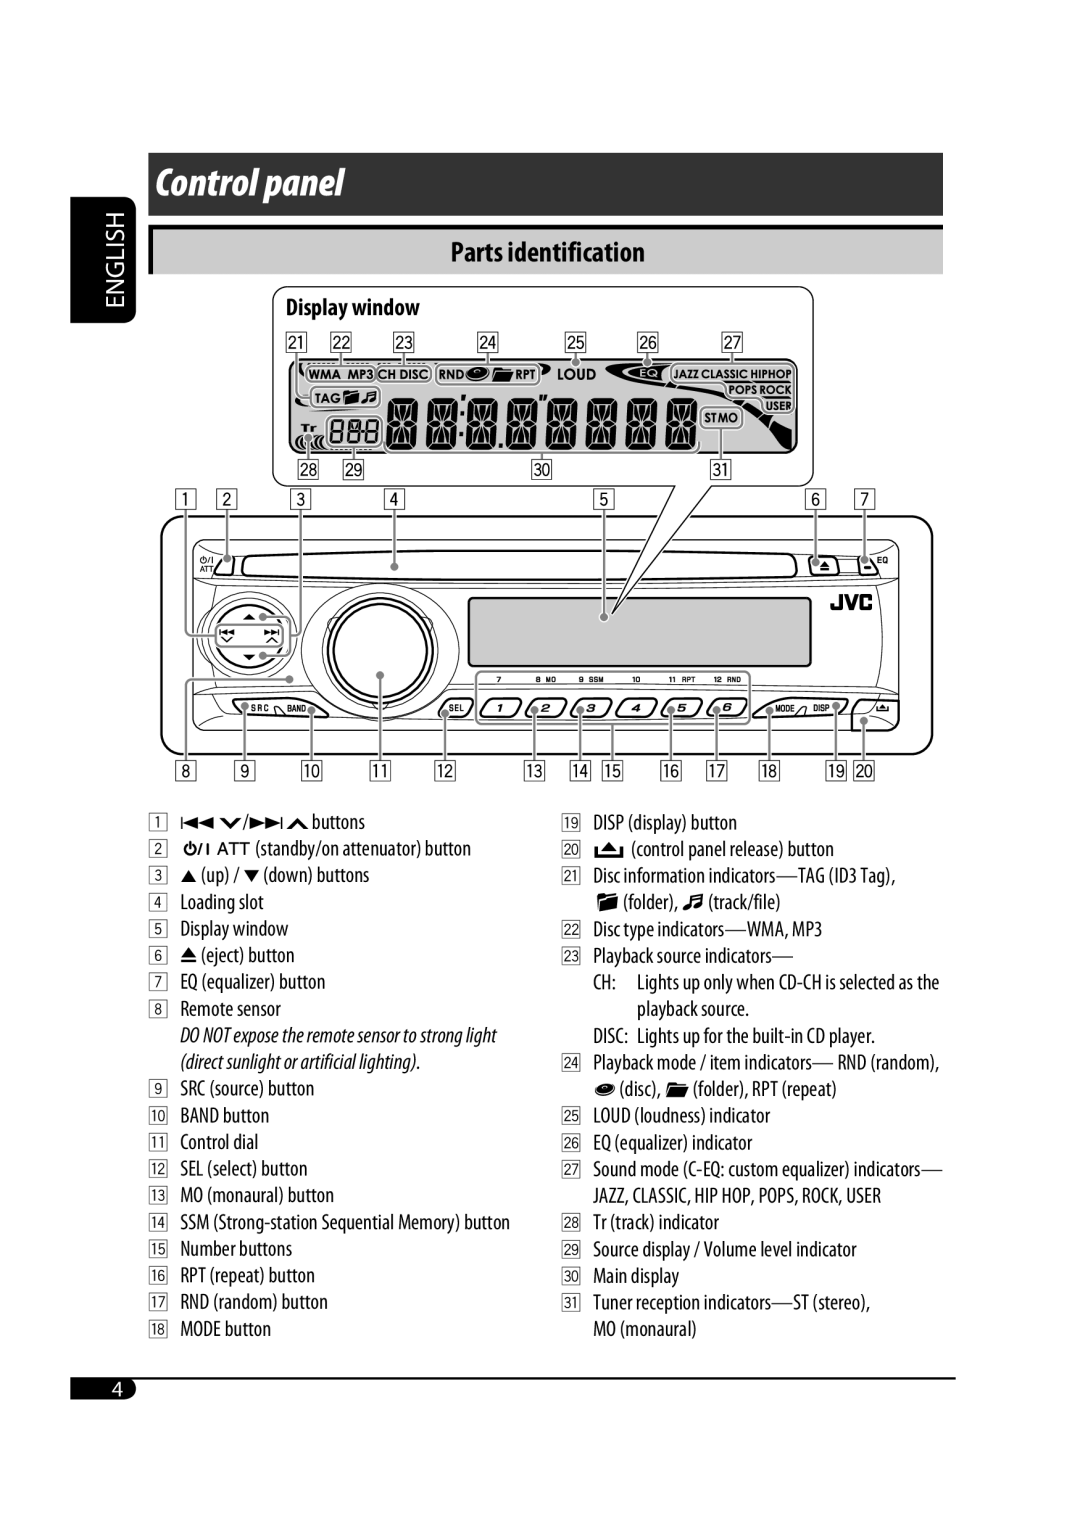 JVC KD-S33 manual Control panel, Parts identification, Display window, English, aDisc information indicators—TAGID3 Tag 